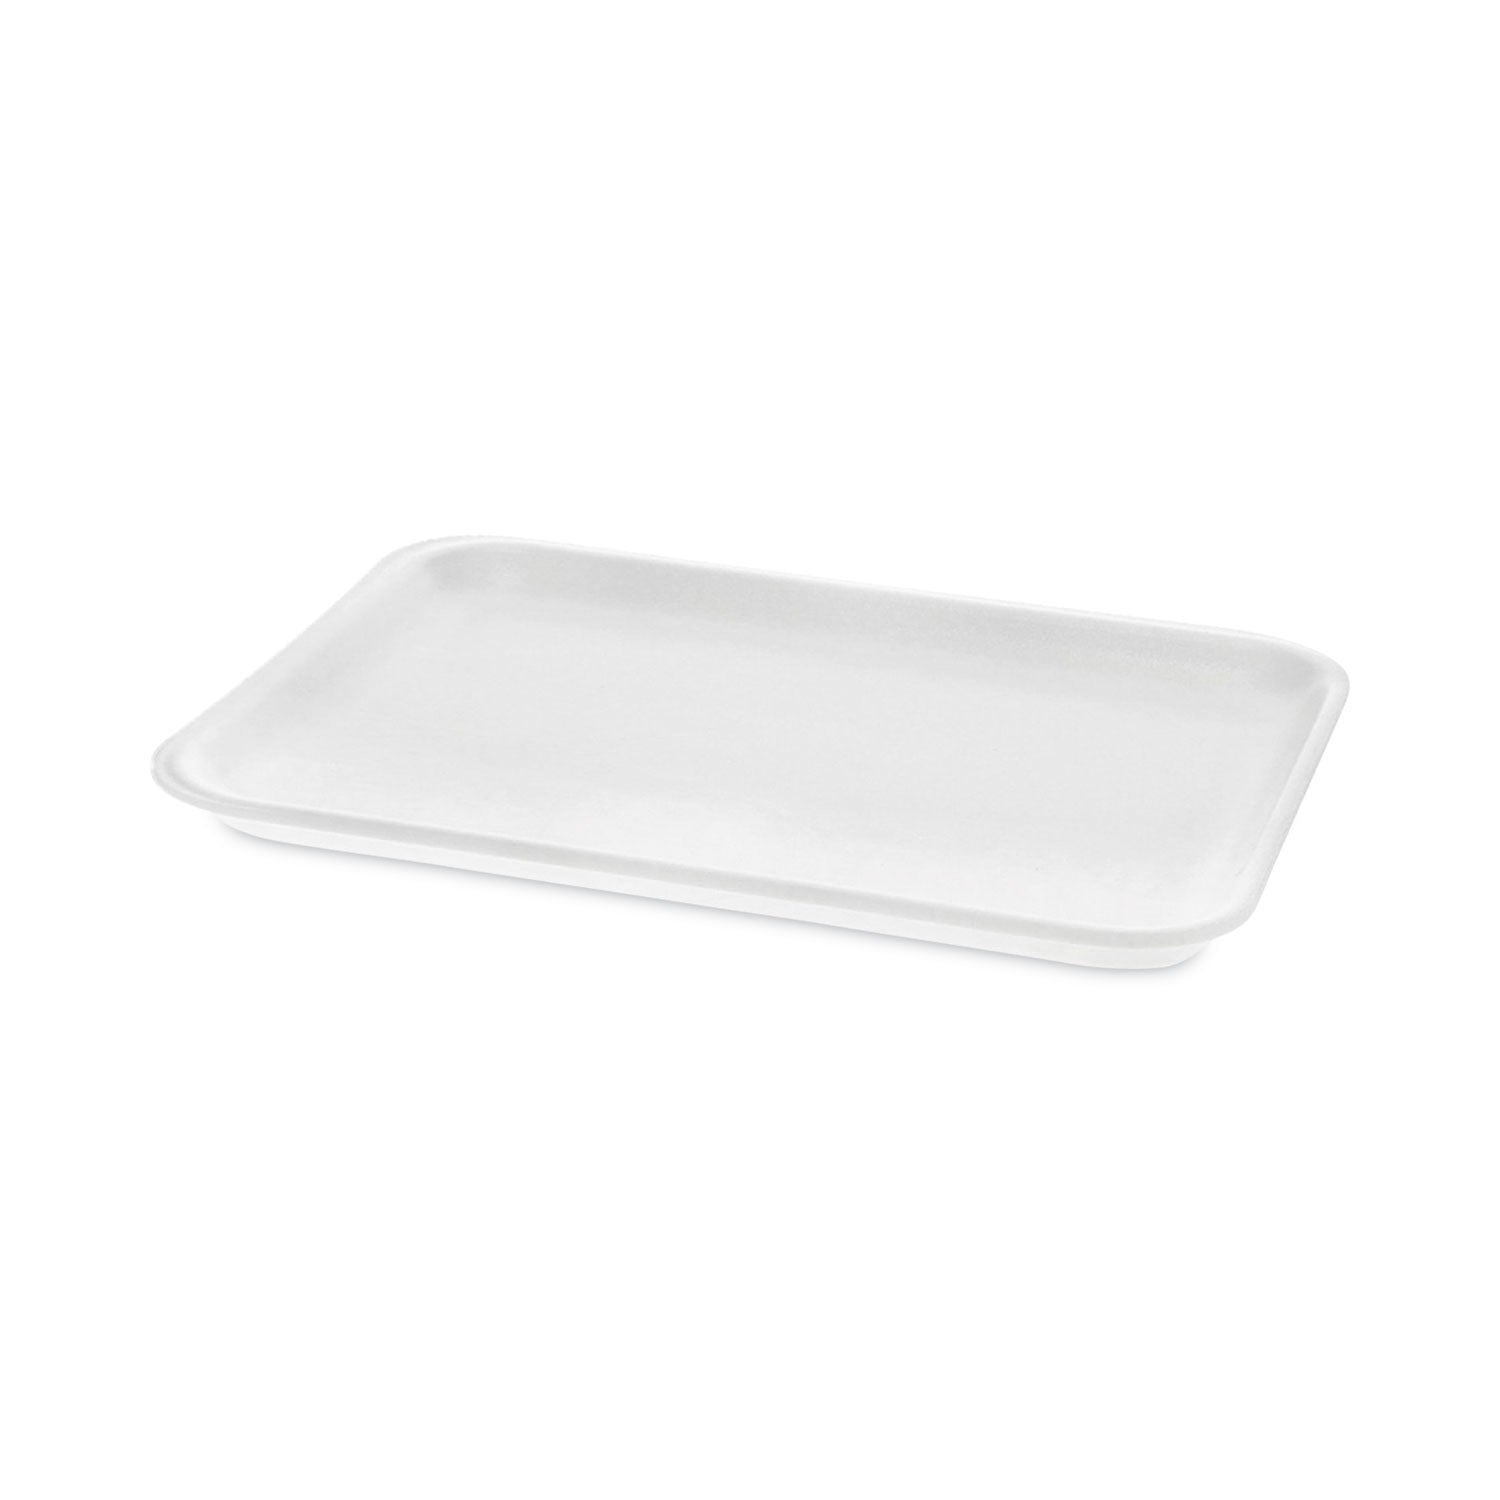 meat-tray-#4-shallow-913-x-713-x-065-white-foam-500-carton_pct0tf104s00000 - 2